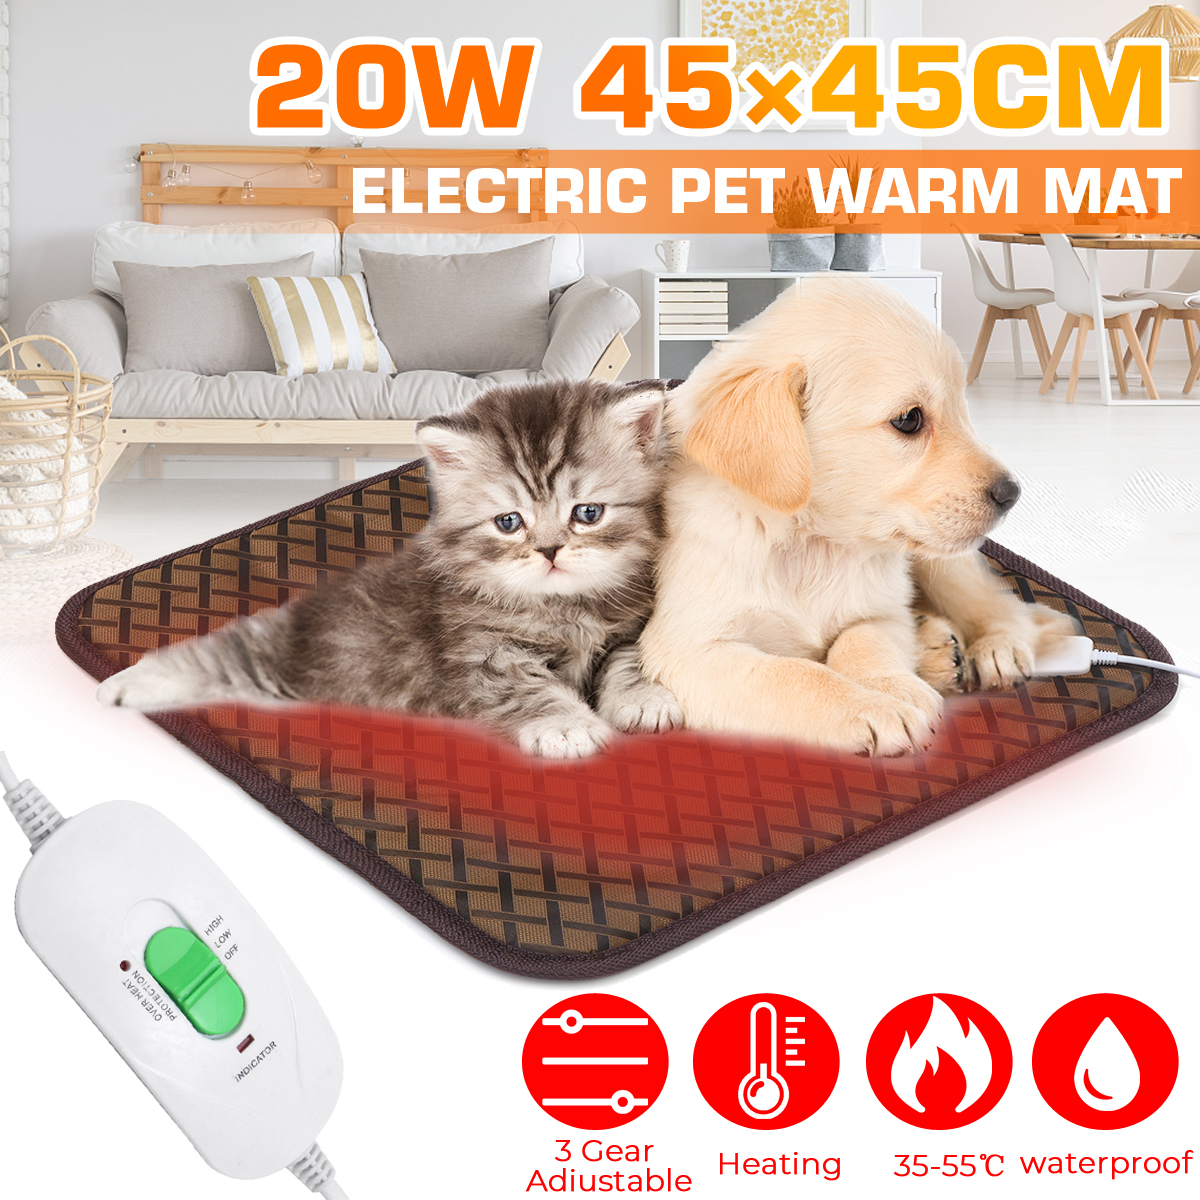 Waterproof-Pet-Cat-Electric-Heat-Heated-Heating-Heater-Pad-Mat-Blanket-35-50degC-1626080-3